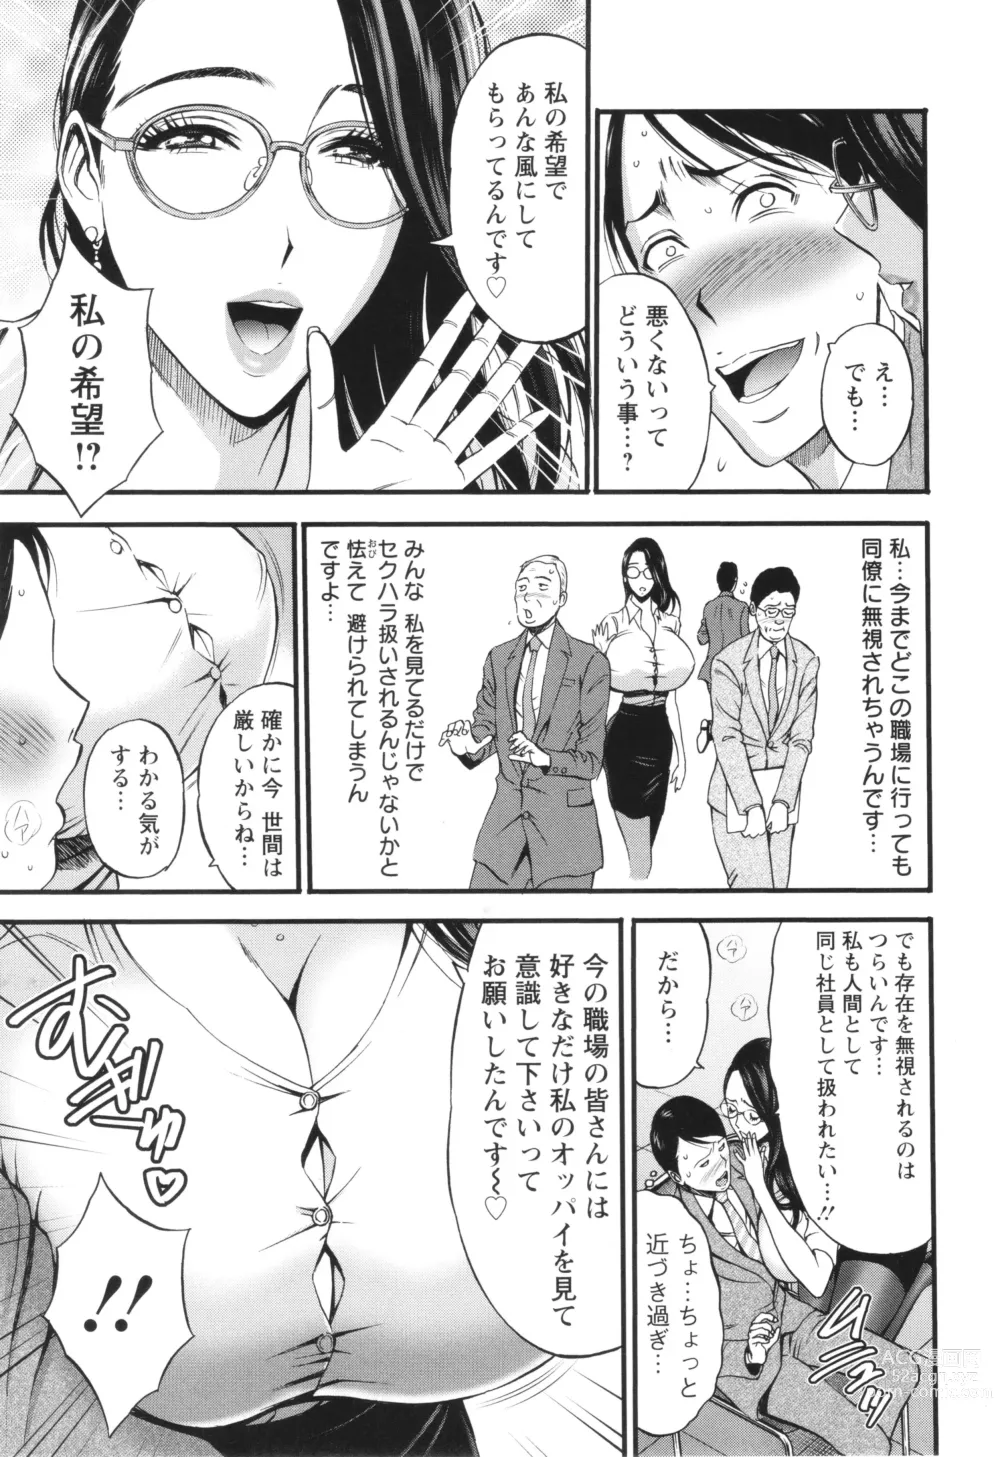 Page 17 of manga Compla Yuruyuru Chimari-san  - Chimaris compliance awareness is very lax.